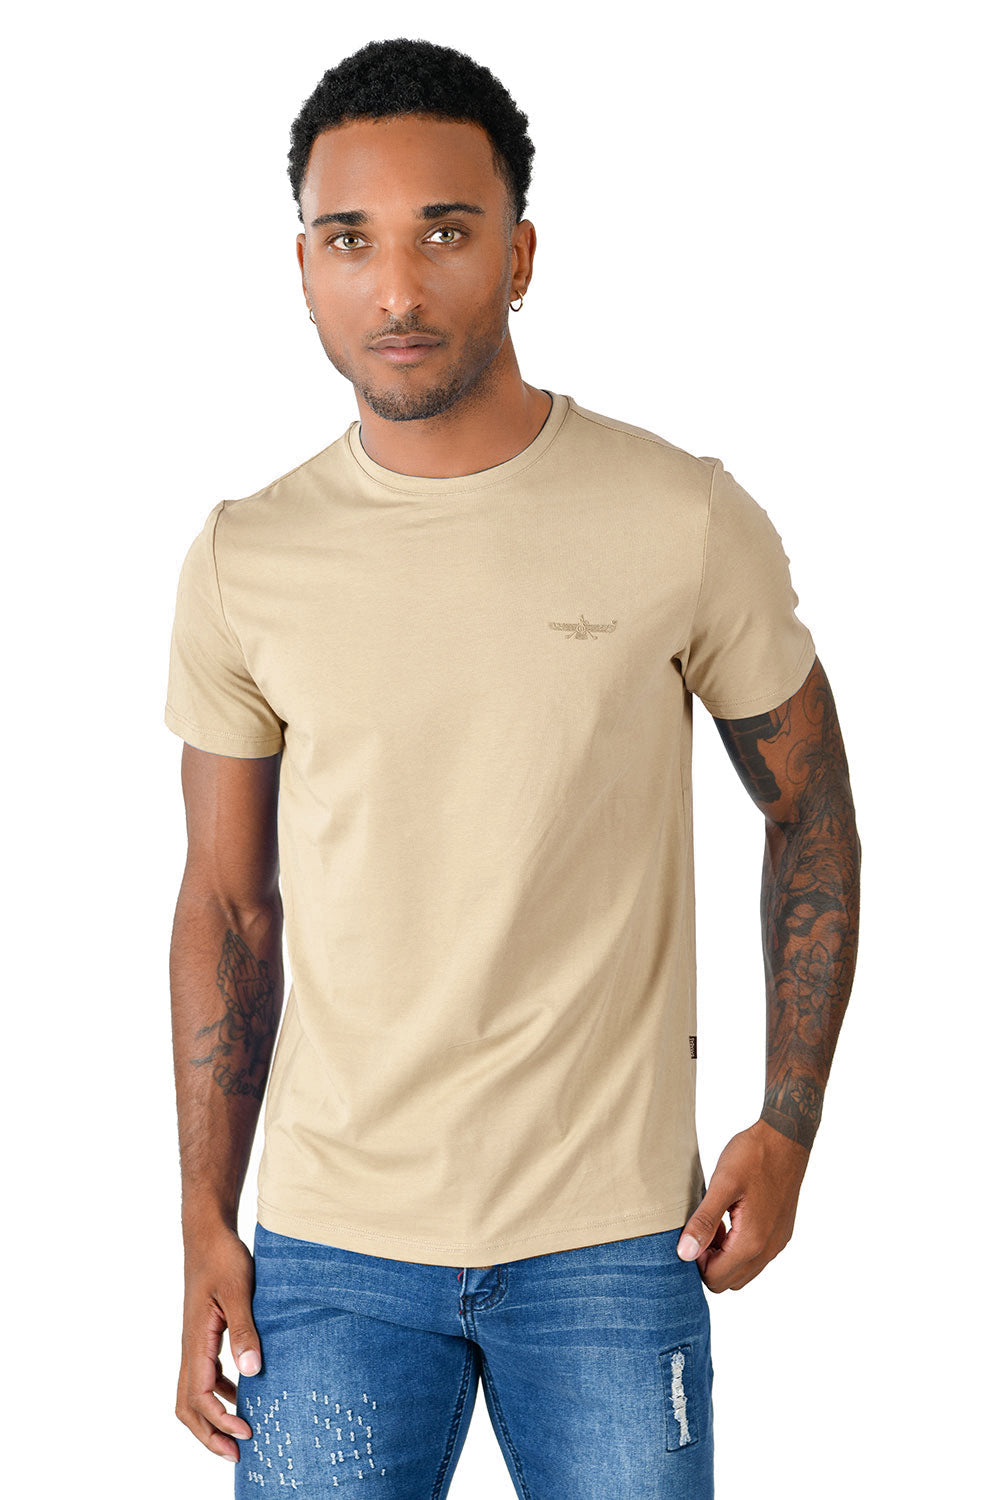 BARABAS Men's Basic Solid Color Premium Crew-Neck T-shirts ST933 Natural